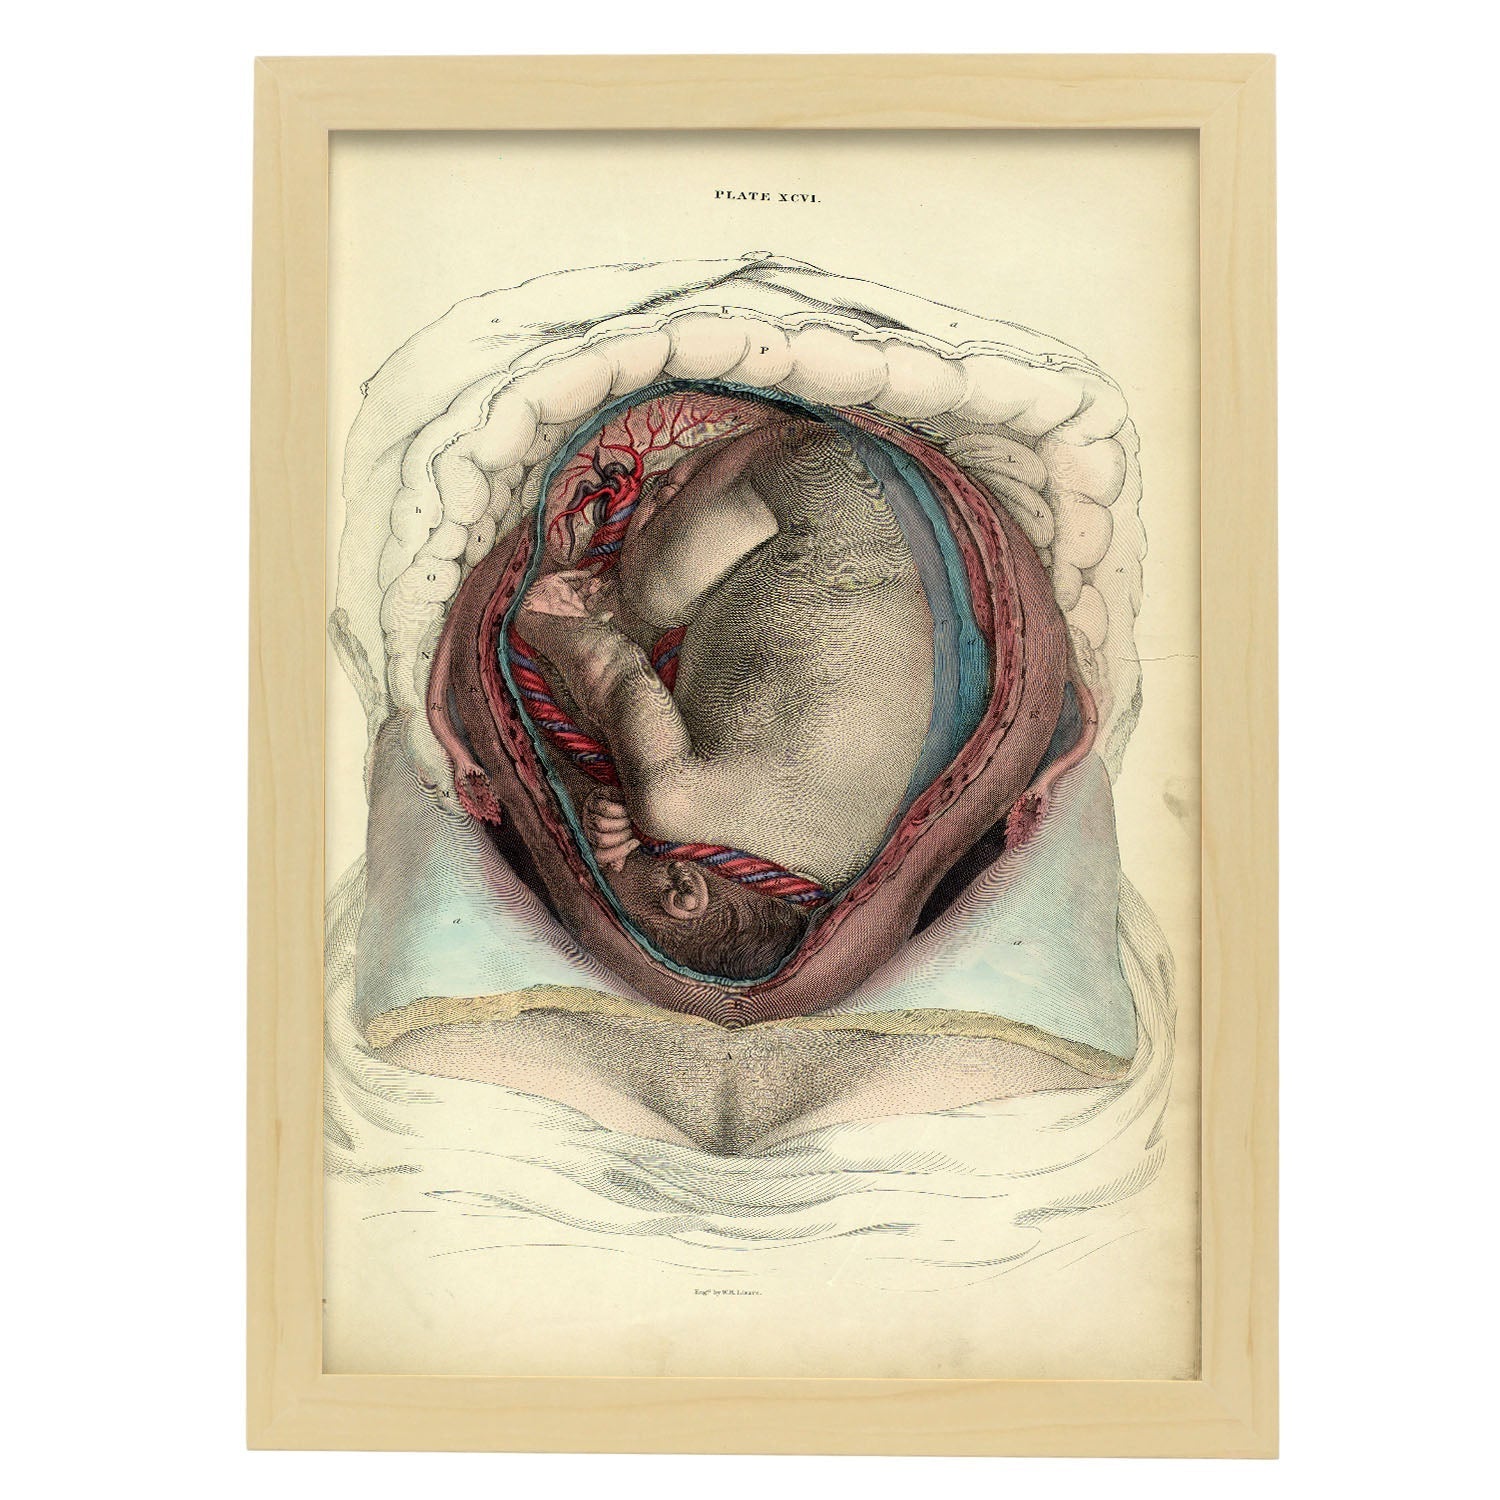 Gravid uterus with fetus-Artwork-Nacnic-A3-Marco Madera clara-Nacnic Estudio SL